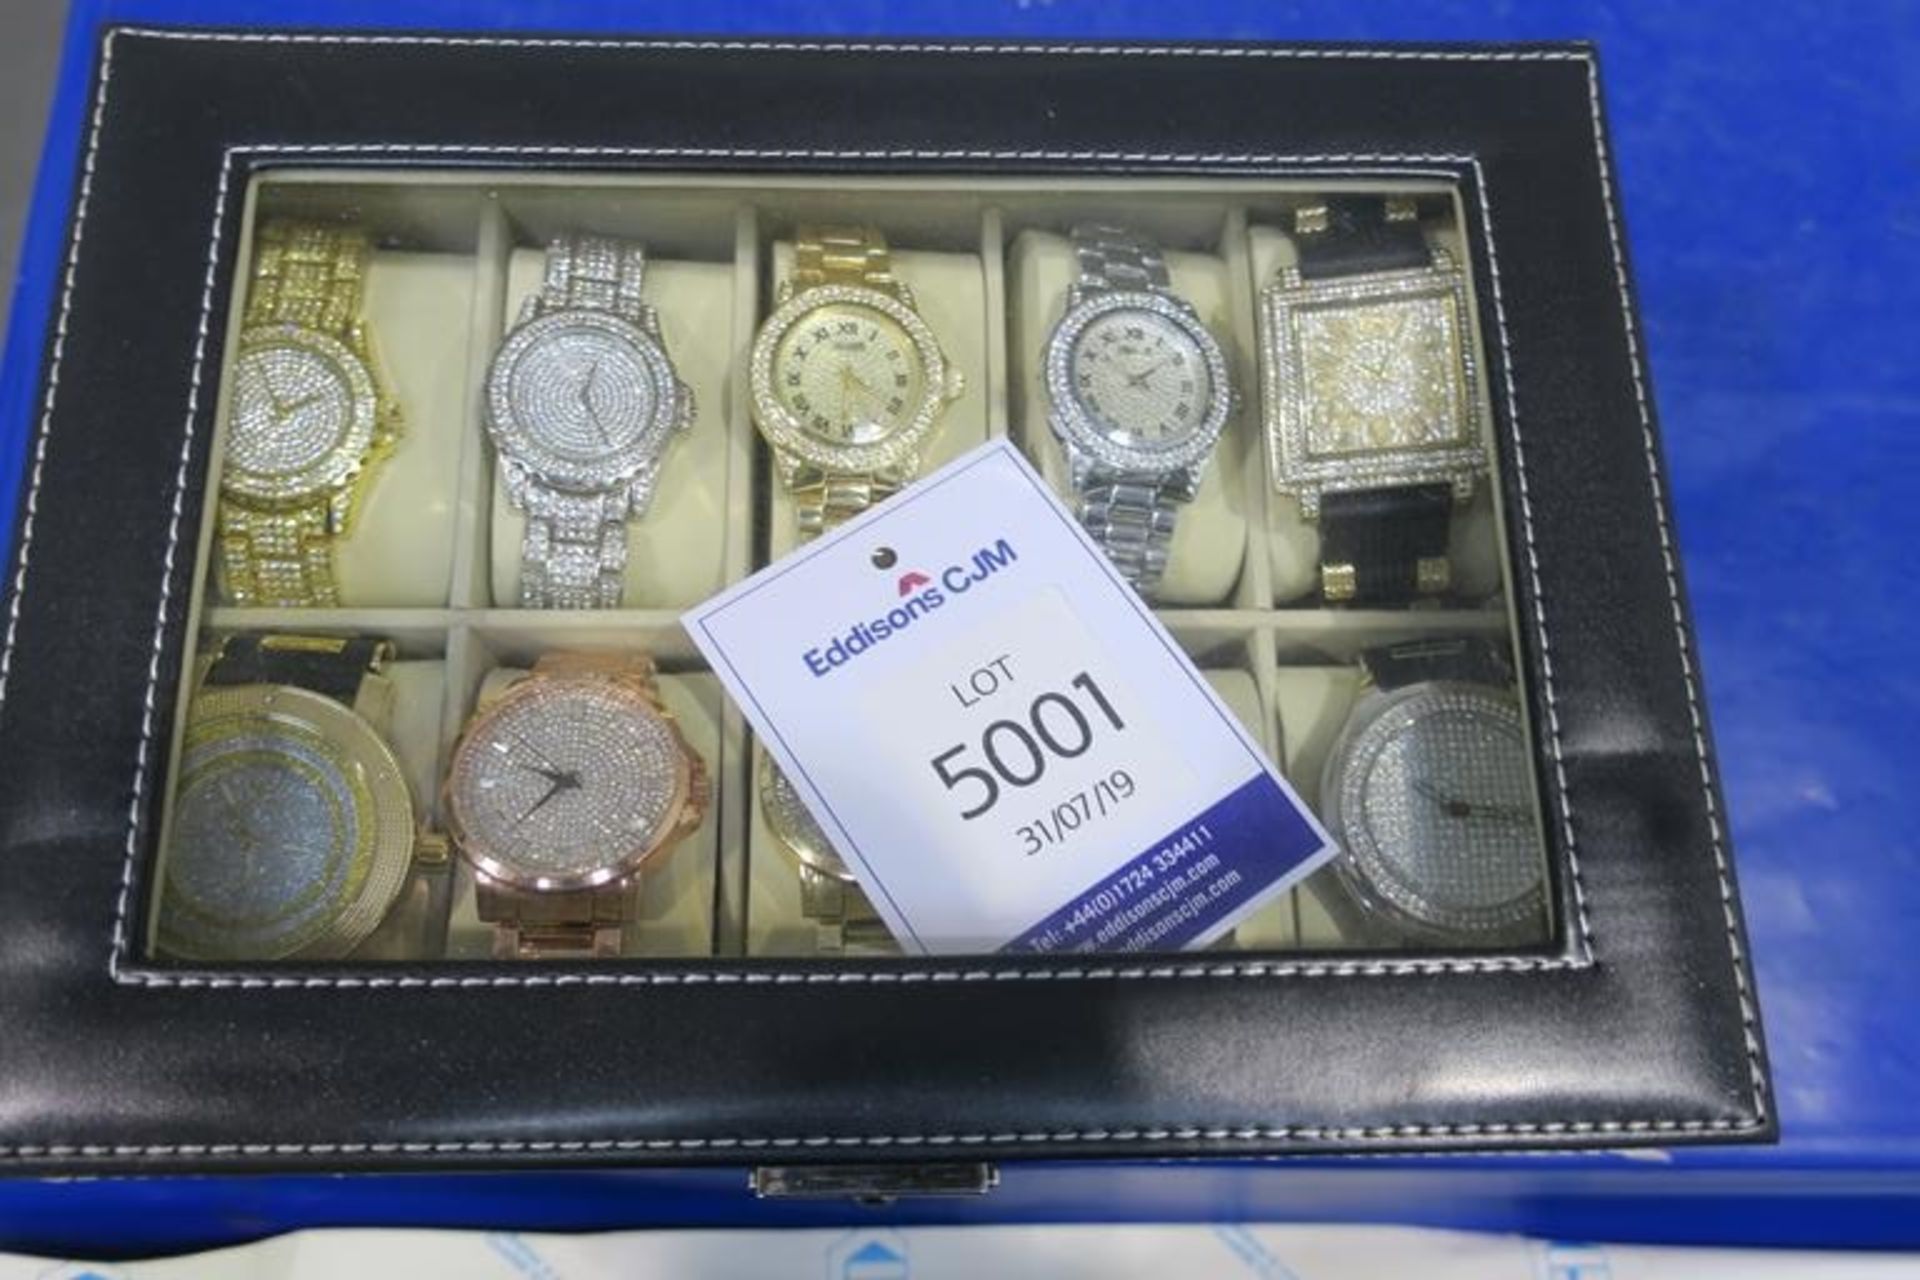 A Black Leatherette Watch Case containing Twenty Wristwatches